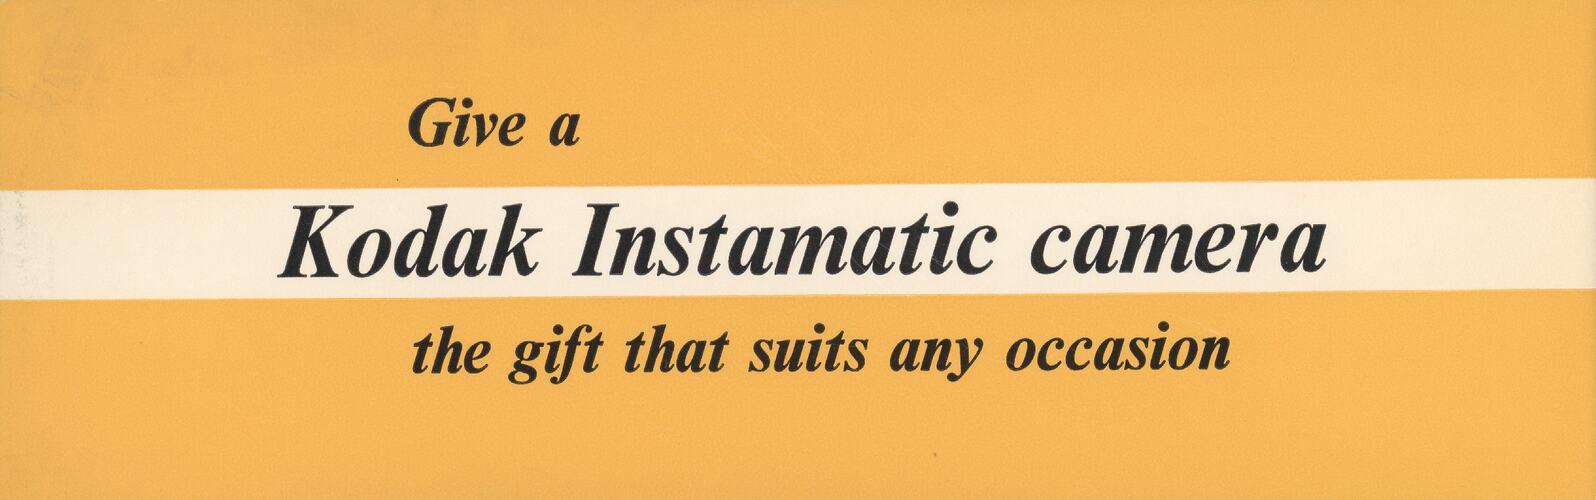 Label - Kodak Australasia Pty Ltd, 'Give a Kodak Instamatic Camera', 1963 - 1970